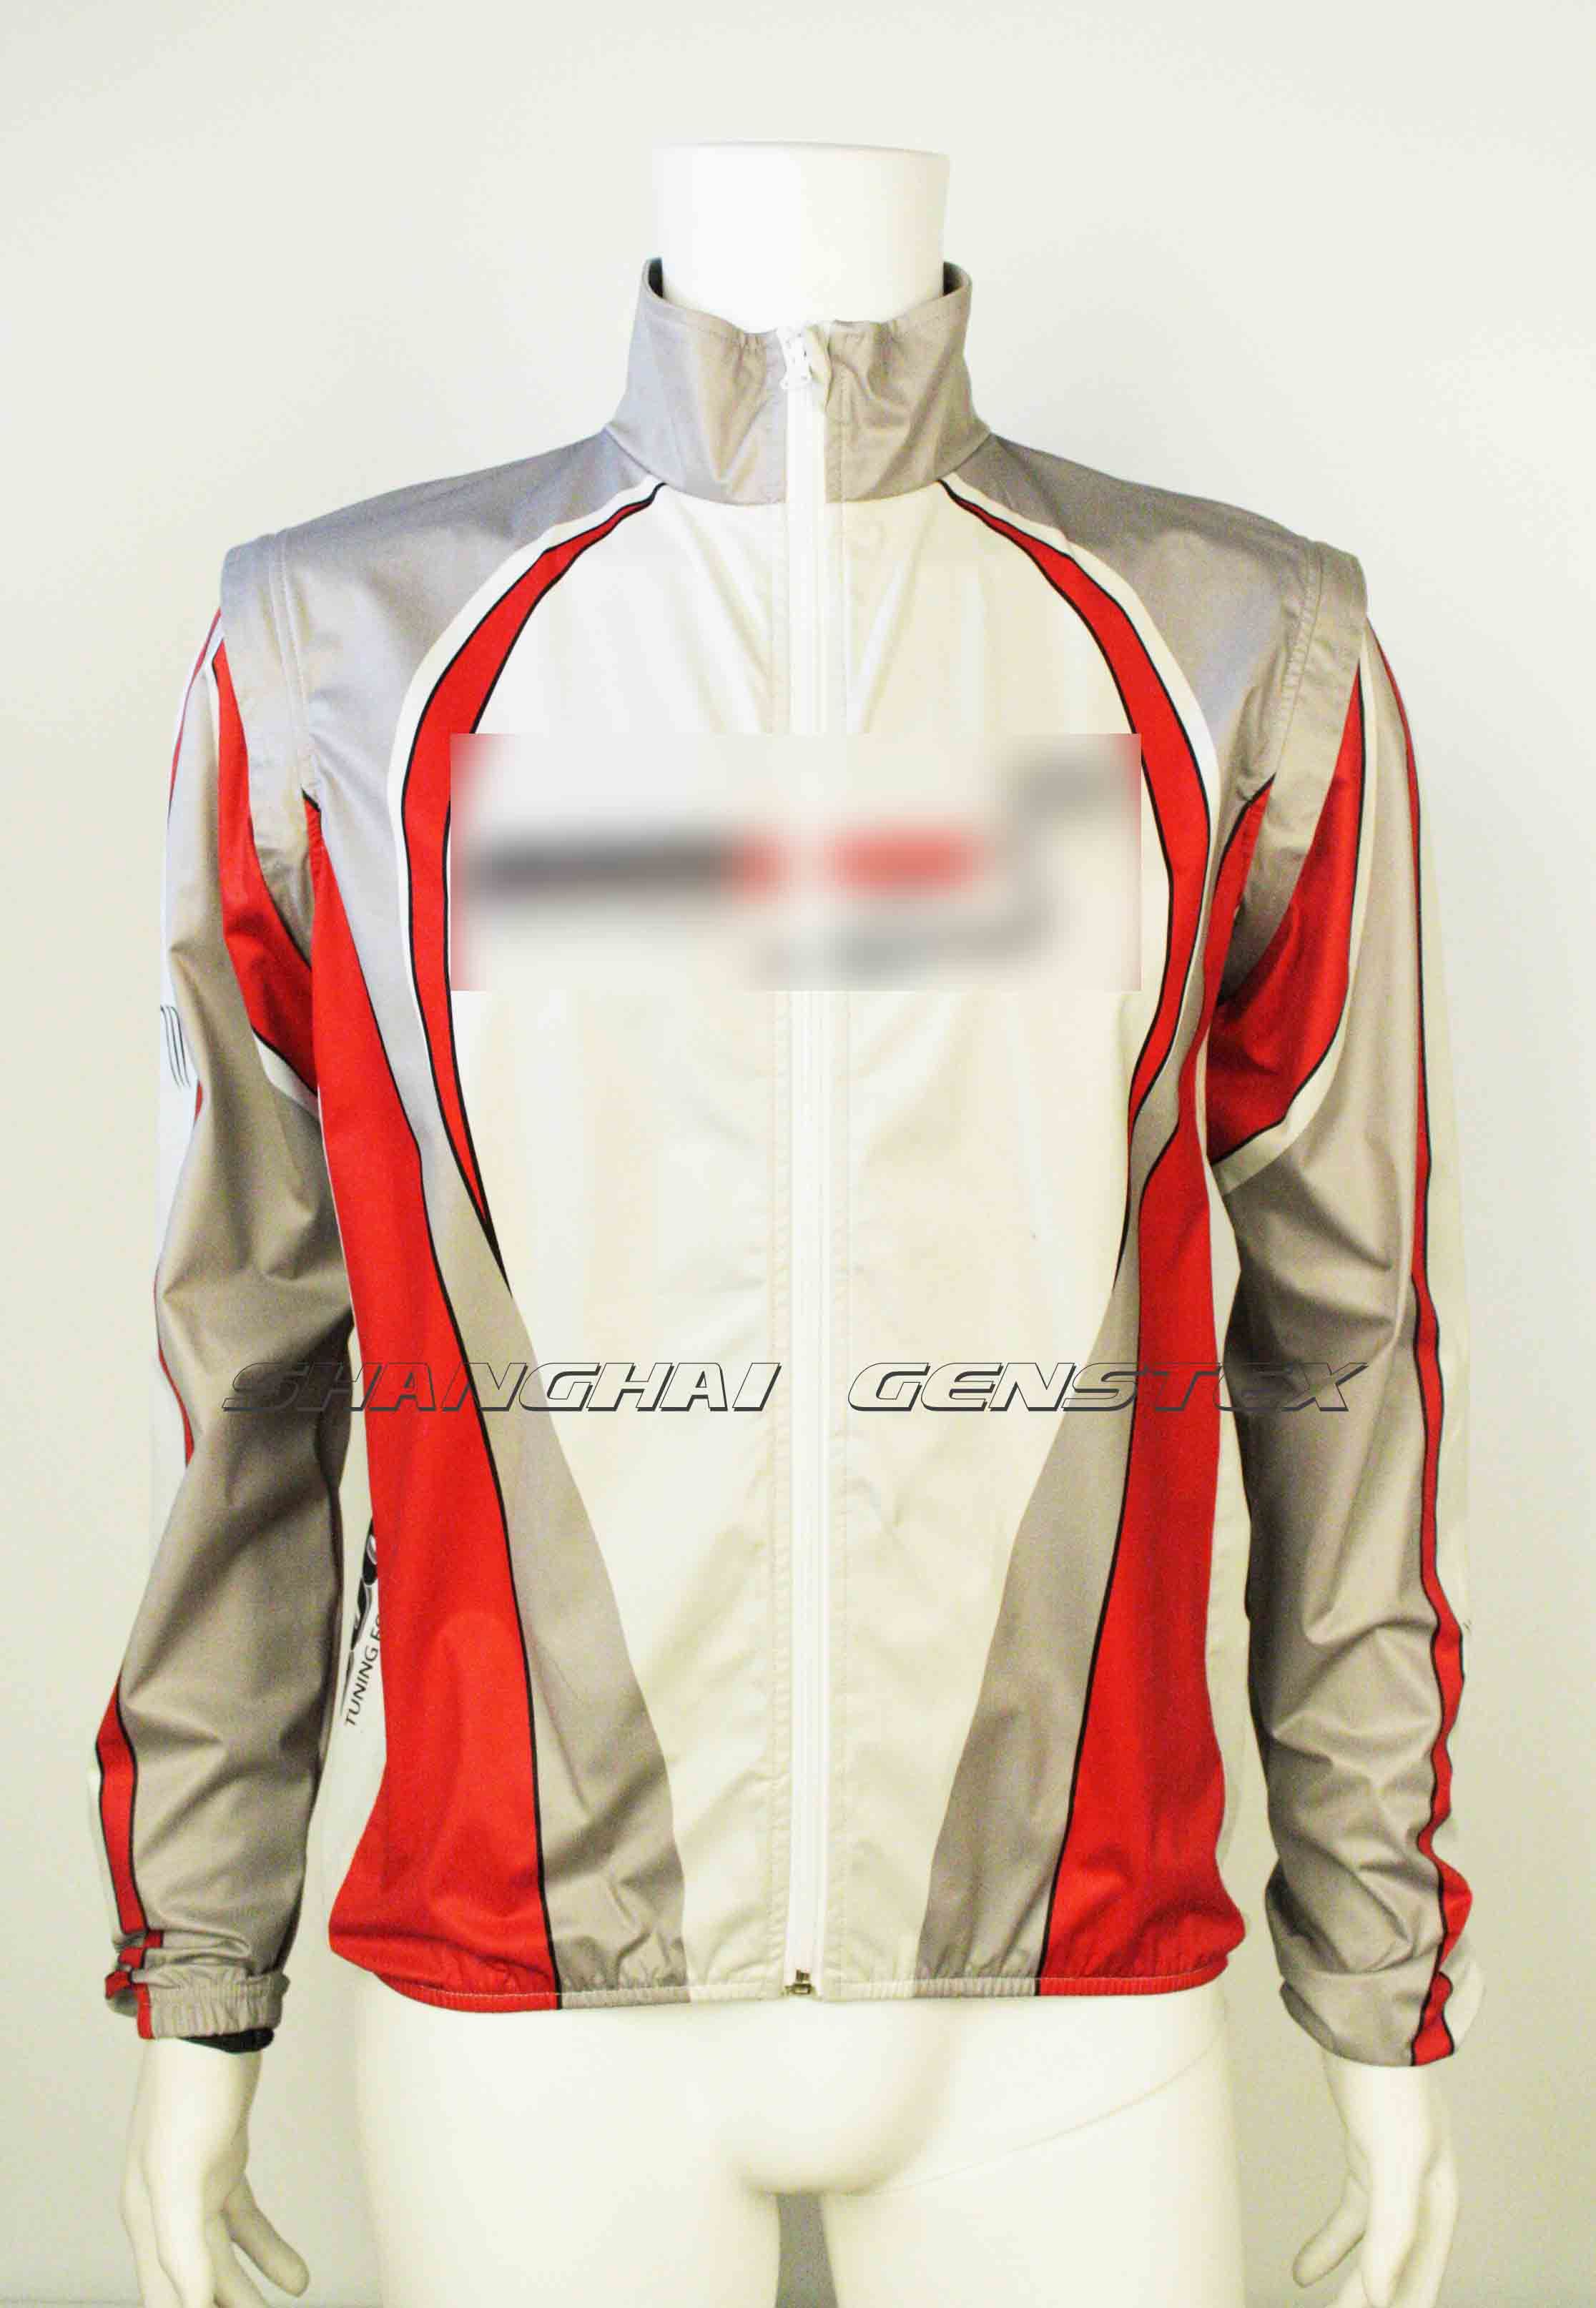 Cycling Wear (bootdoc jacket)